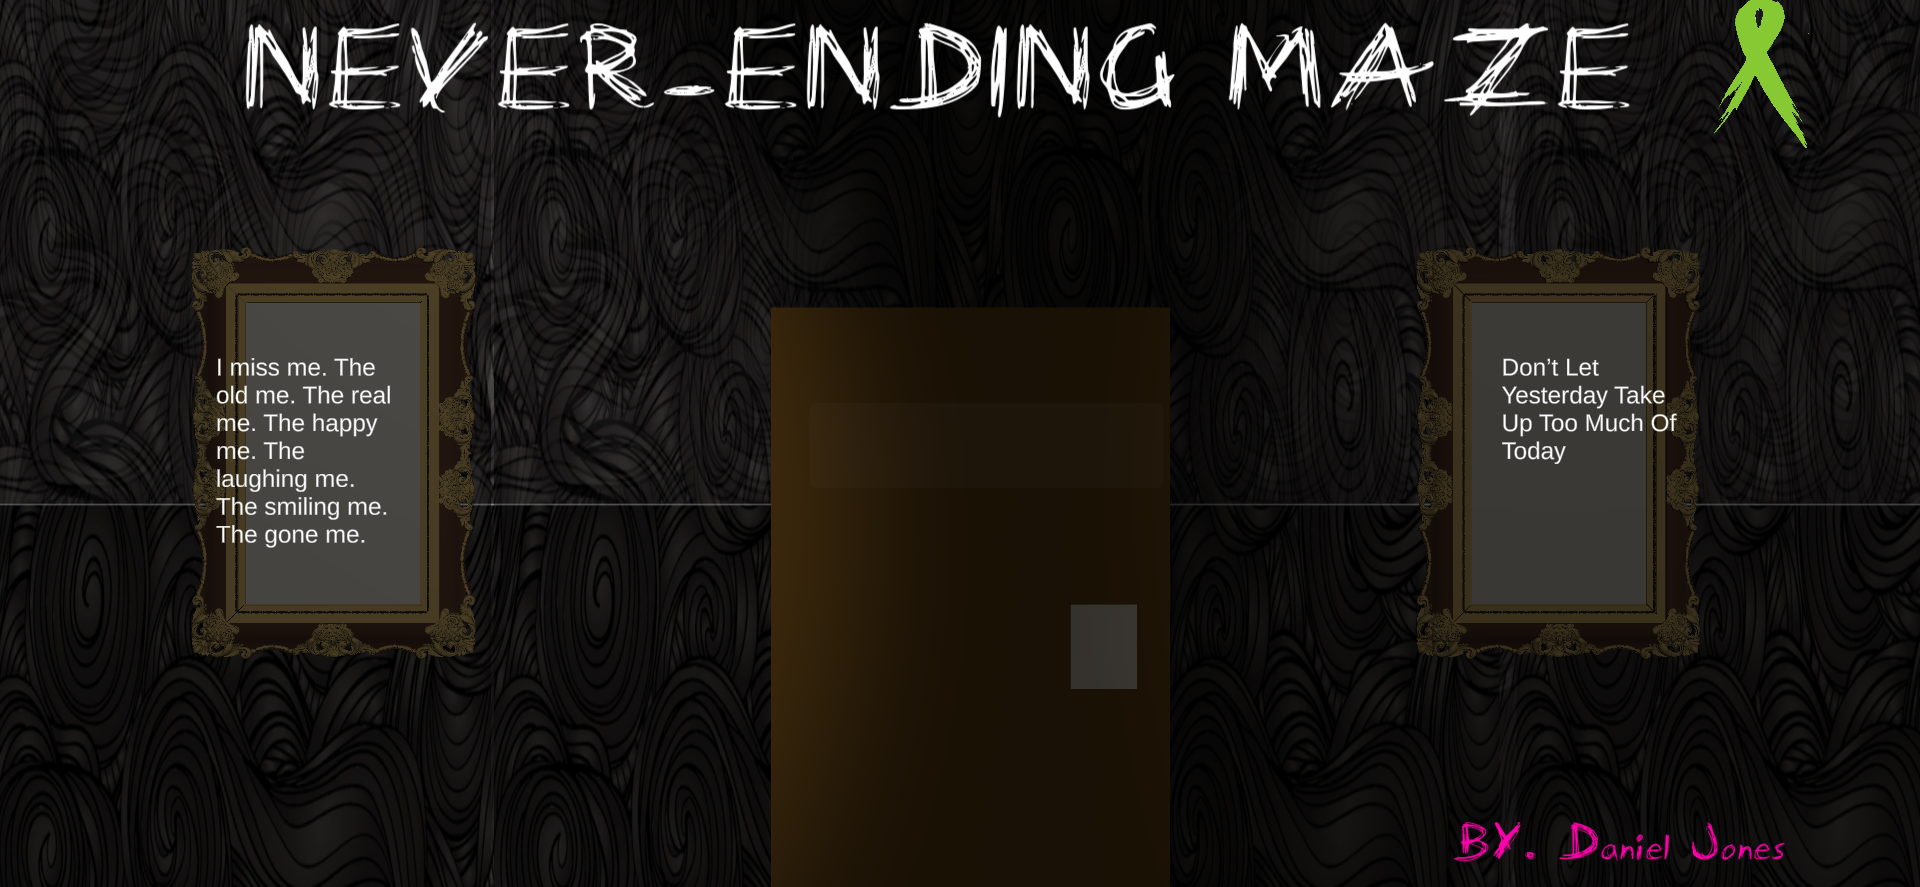 never-ending maze